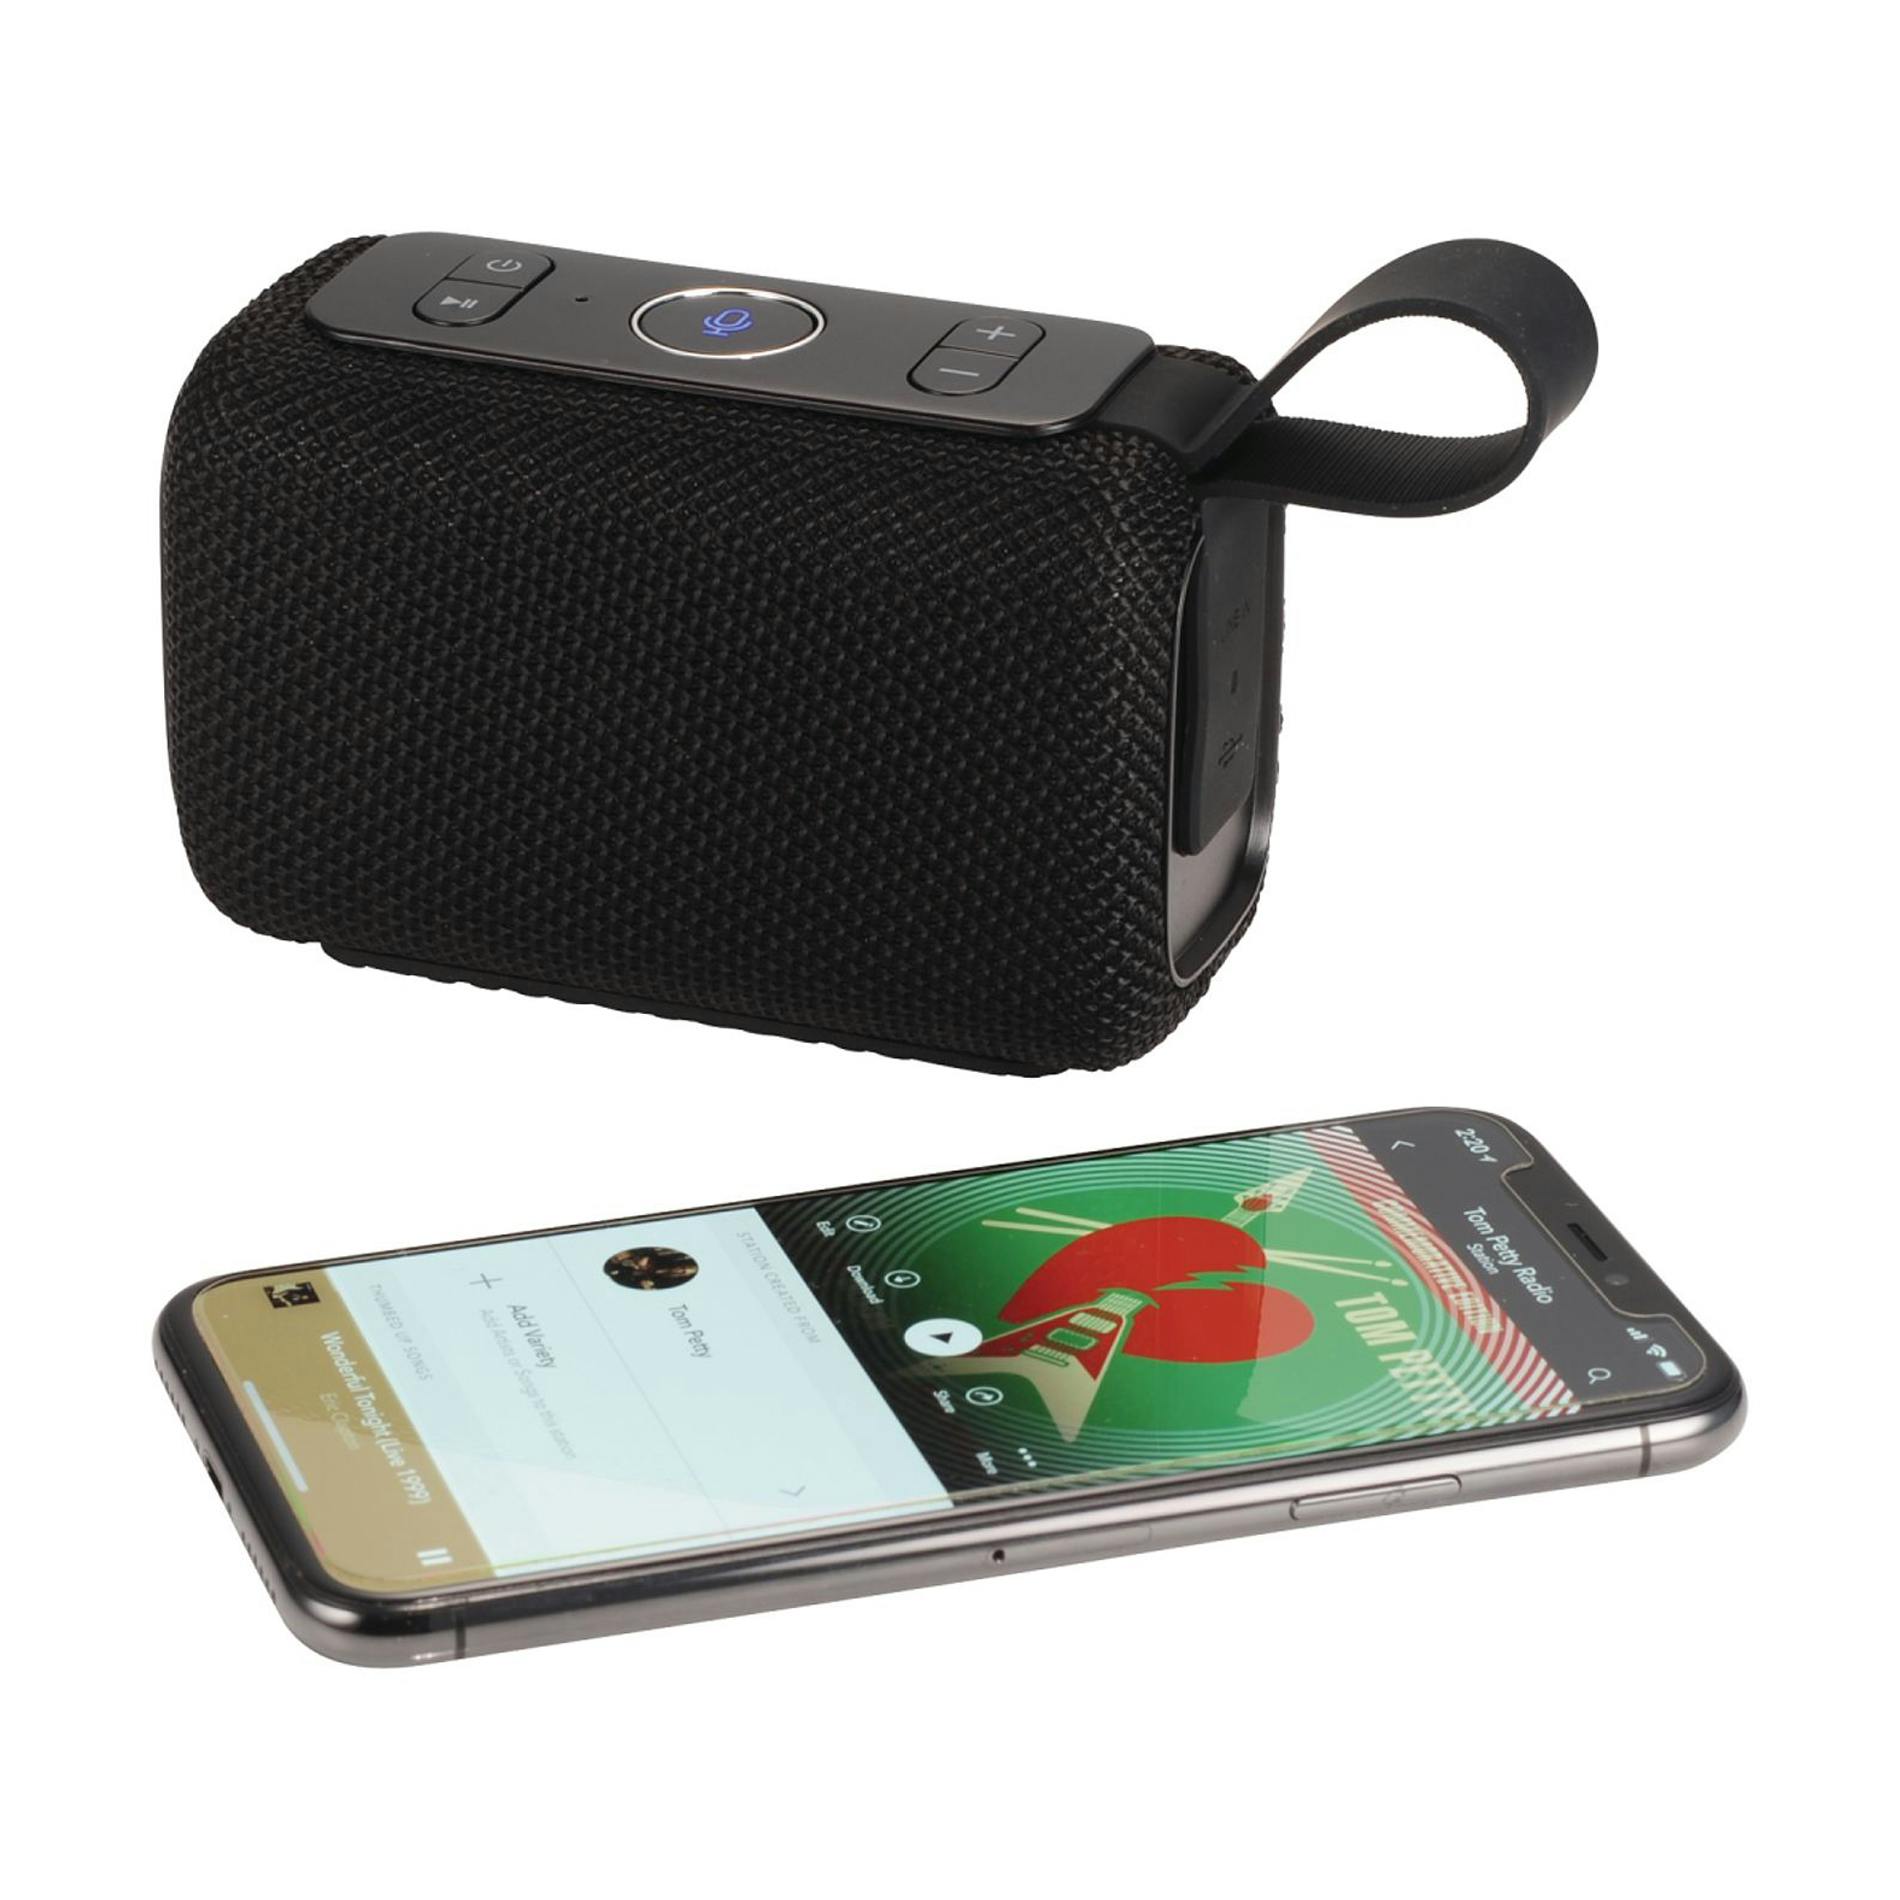 Outdoor Bluetooth Speaker with Amazon Alexa - additional Image 2